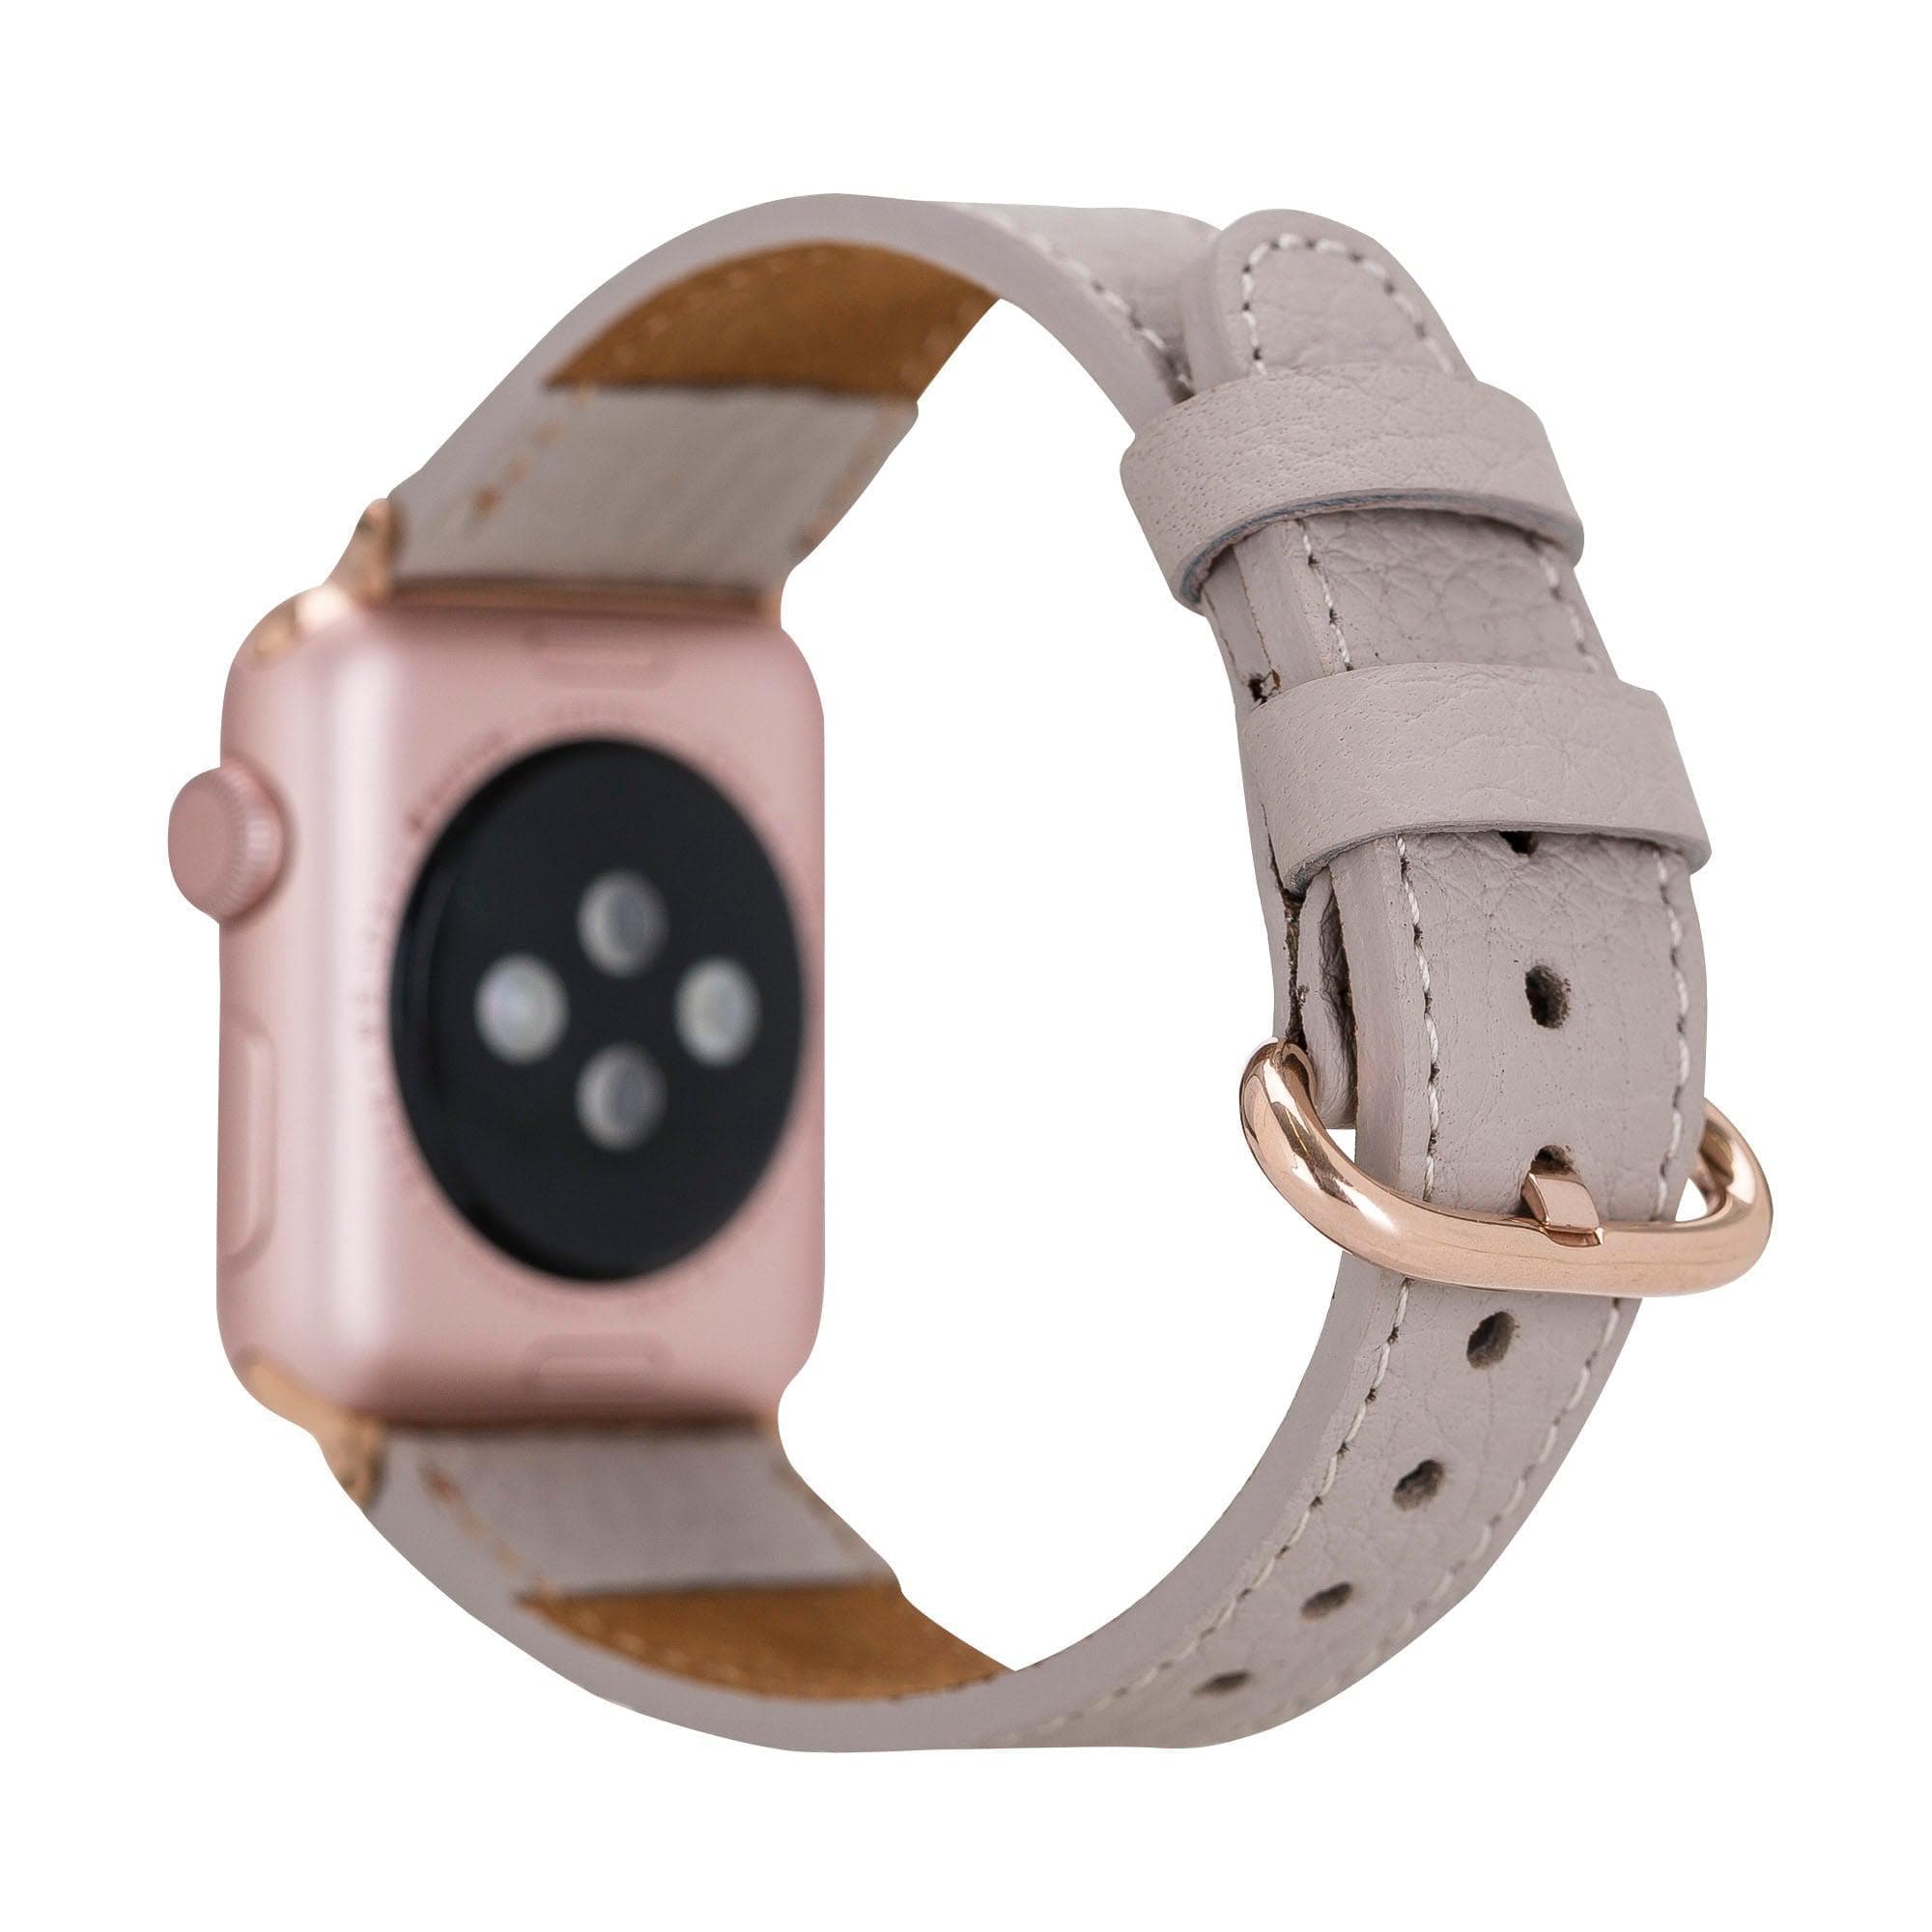 Wells  Apple Watch Leather Strap Bouletta